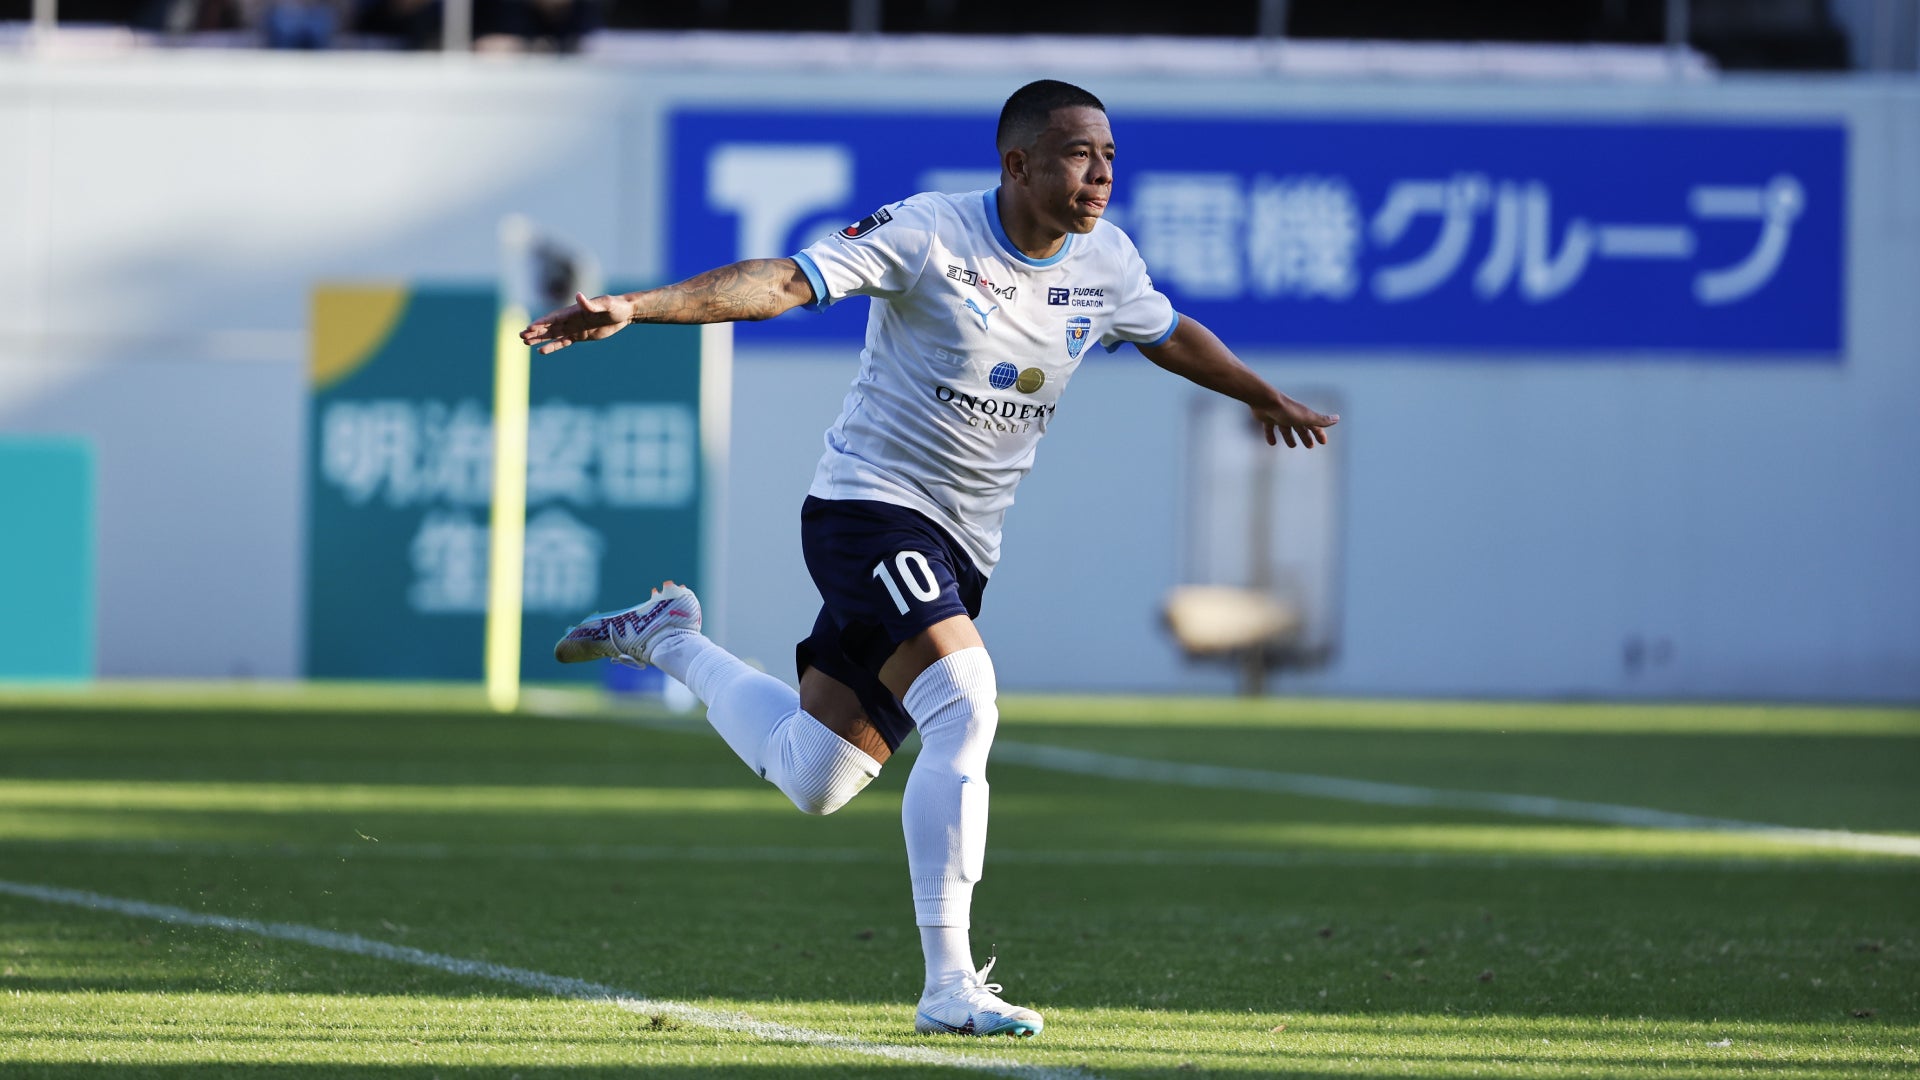 YOKOHAMA FC ONLINE STORE | 横浜FC・公式オンラインストア